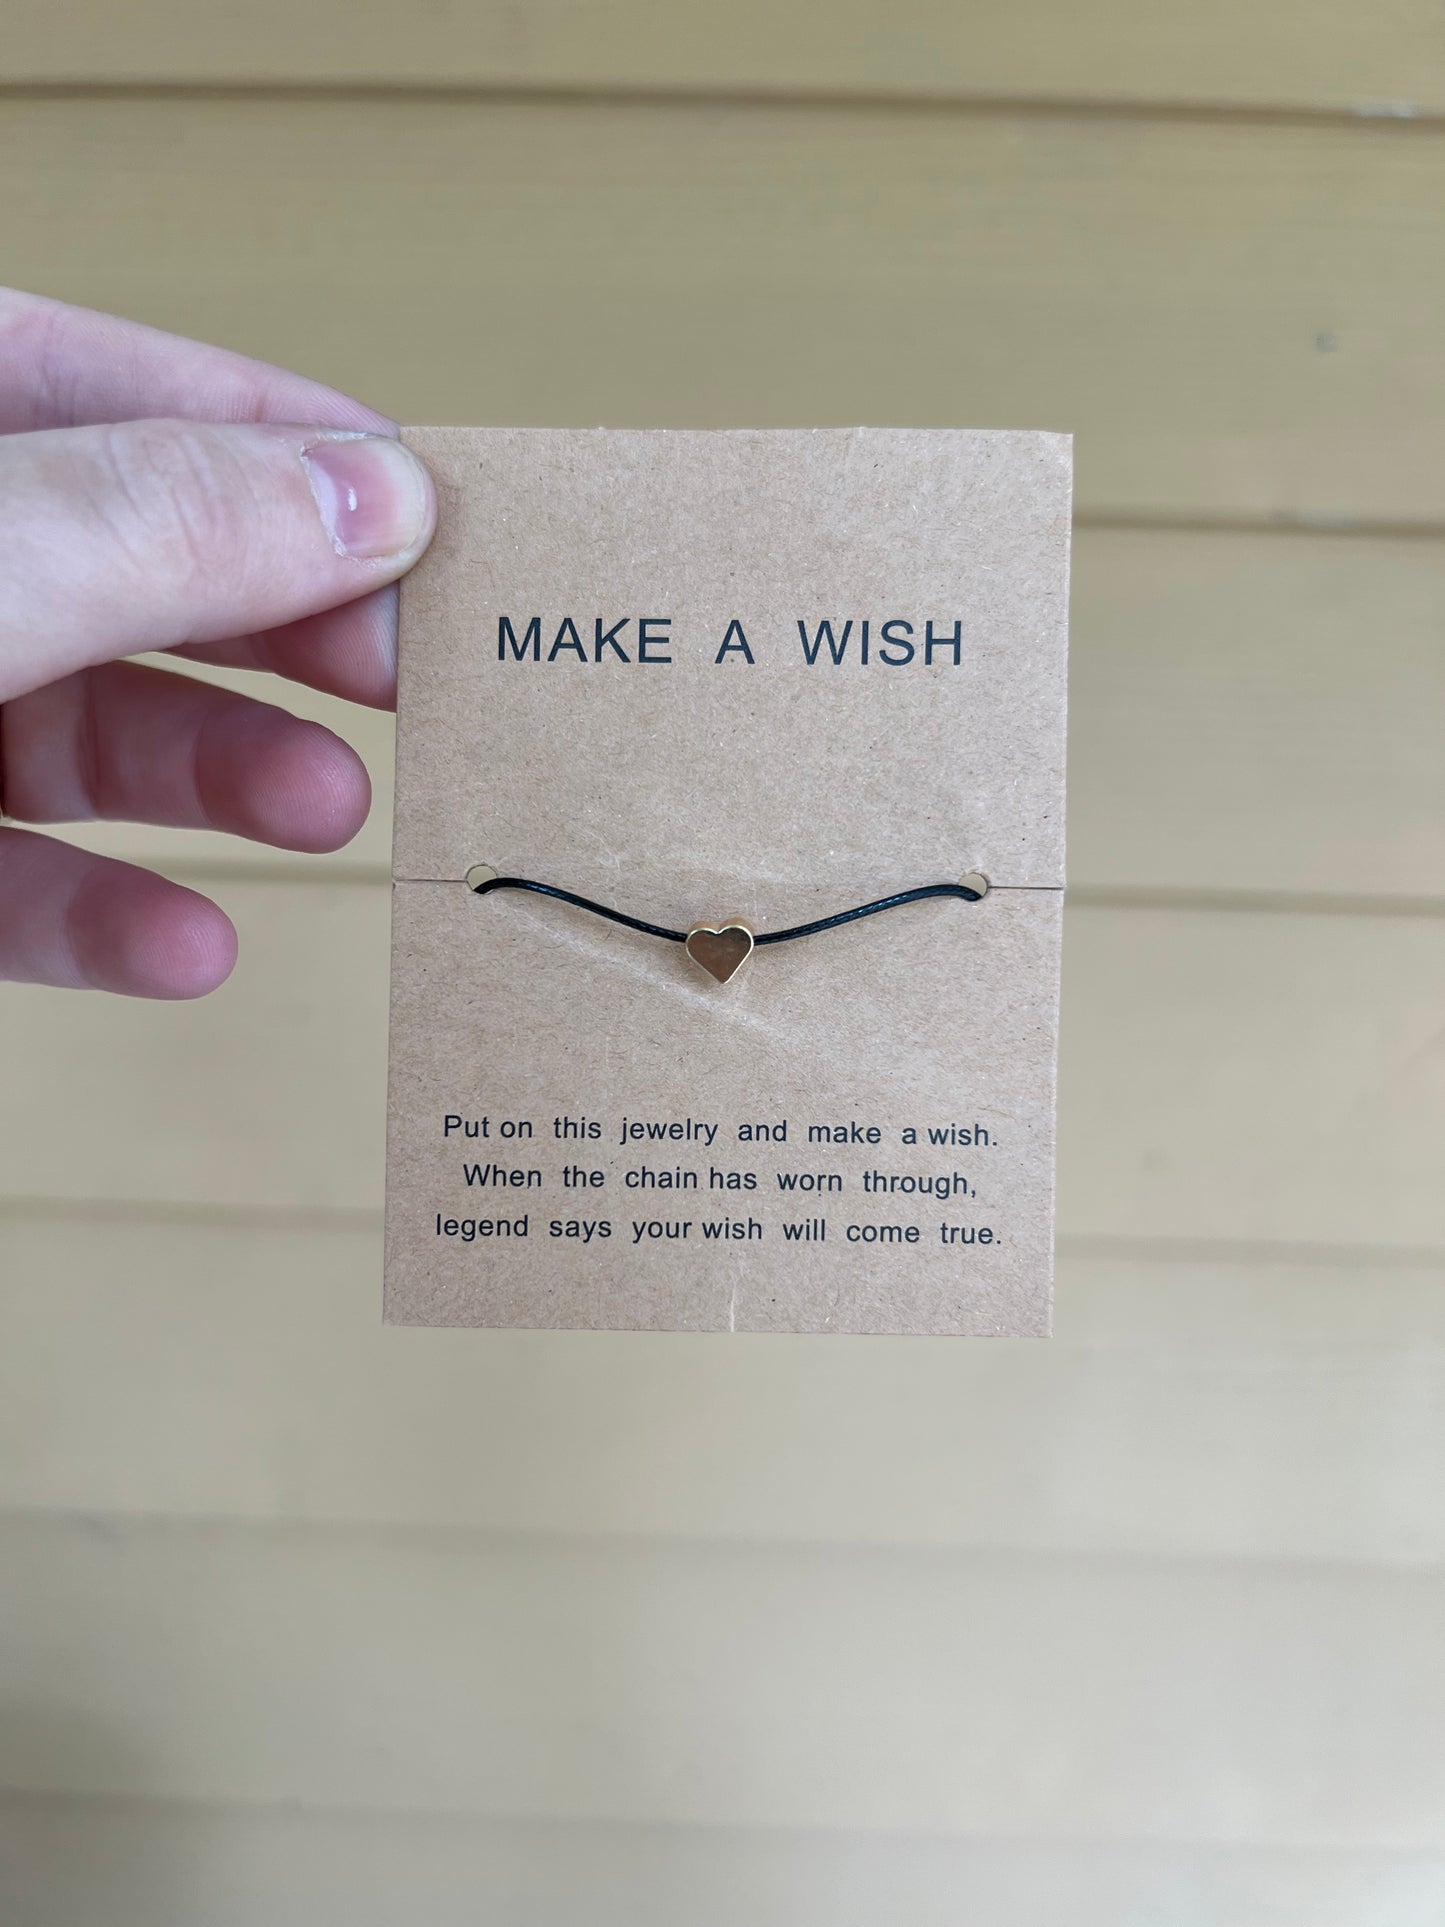 Make a wish bracelet & card